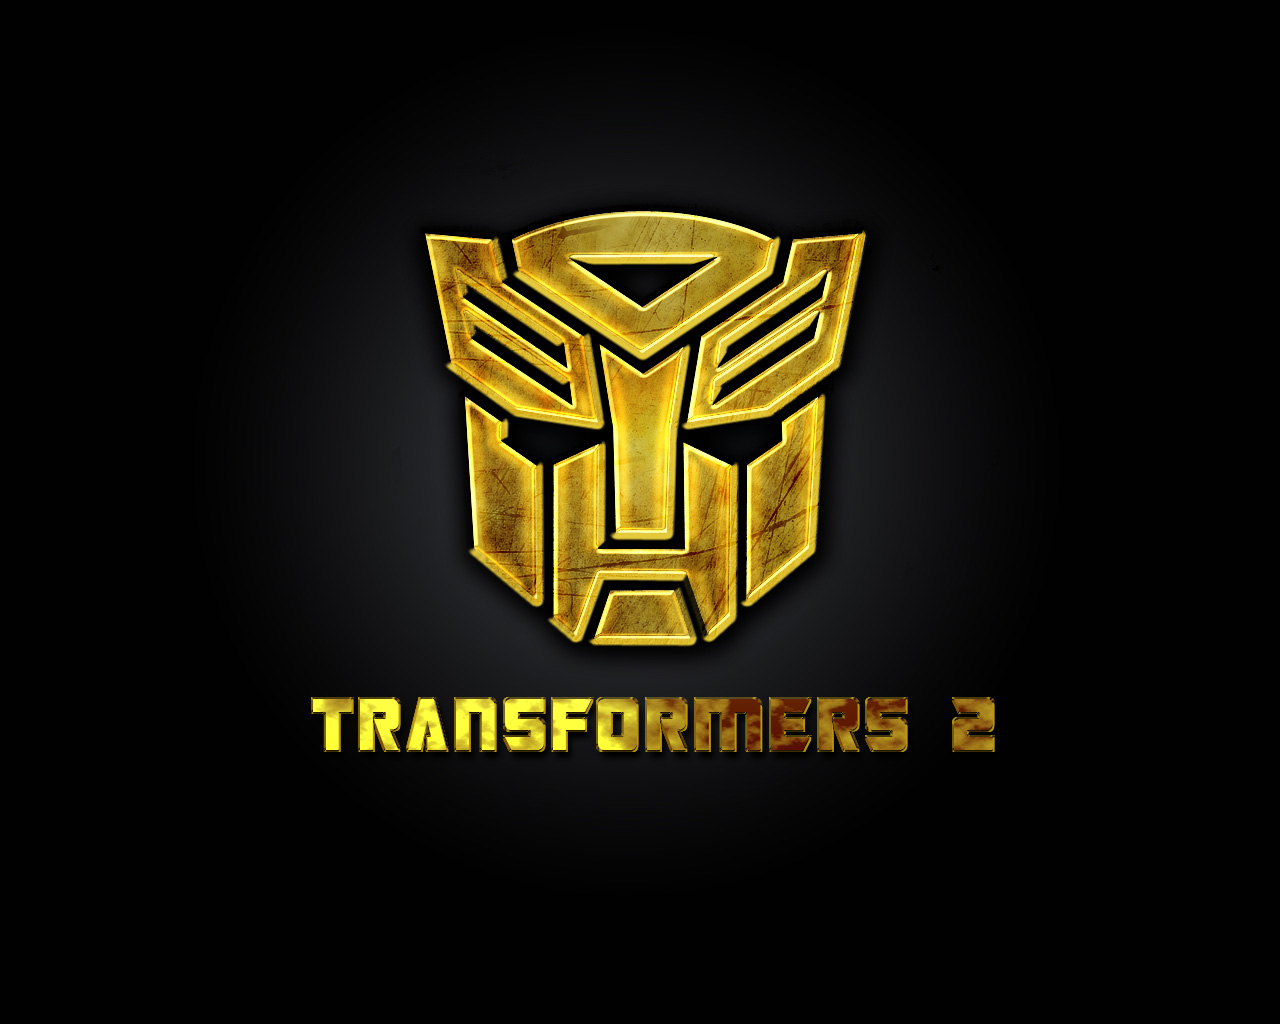 Transformers 2 Revenge of the Fallen movie wallpaper